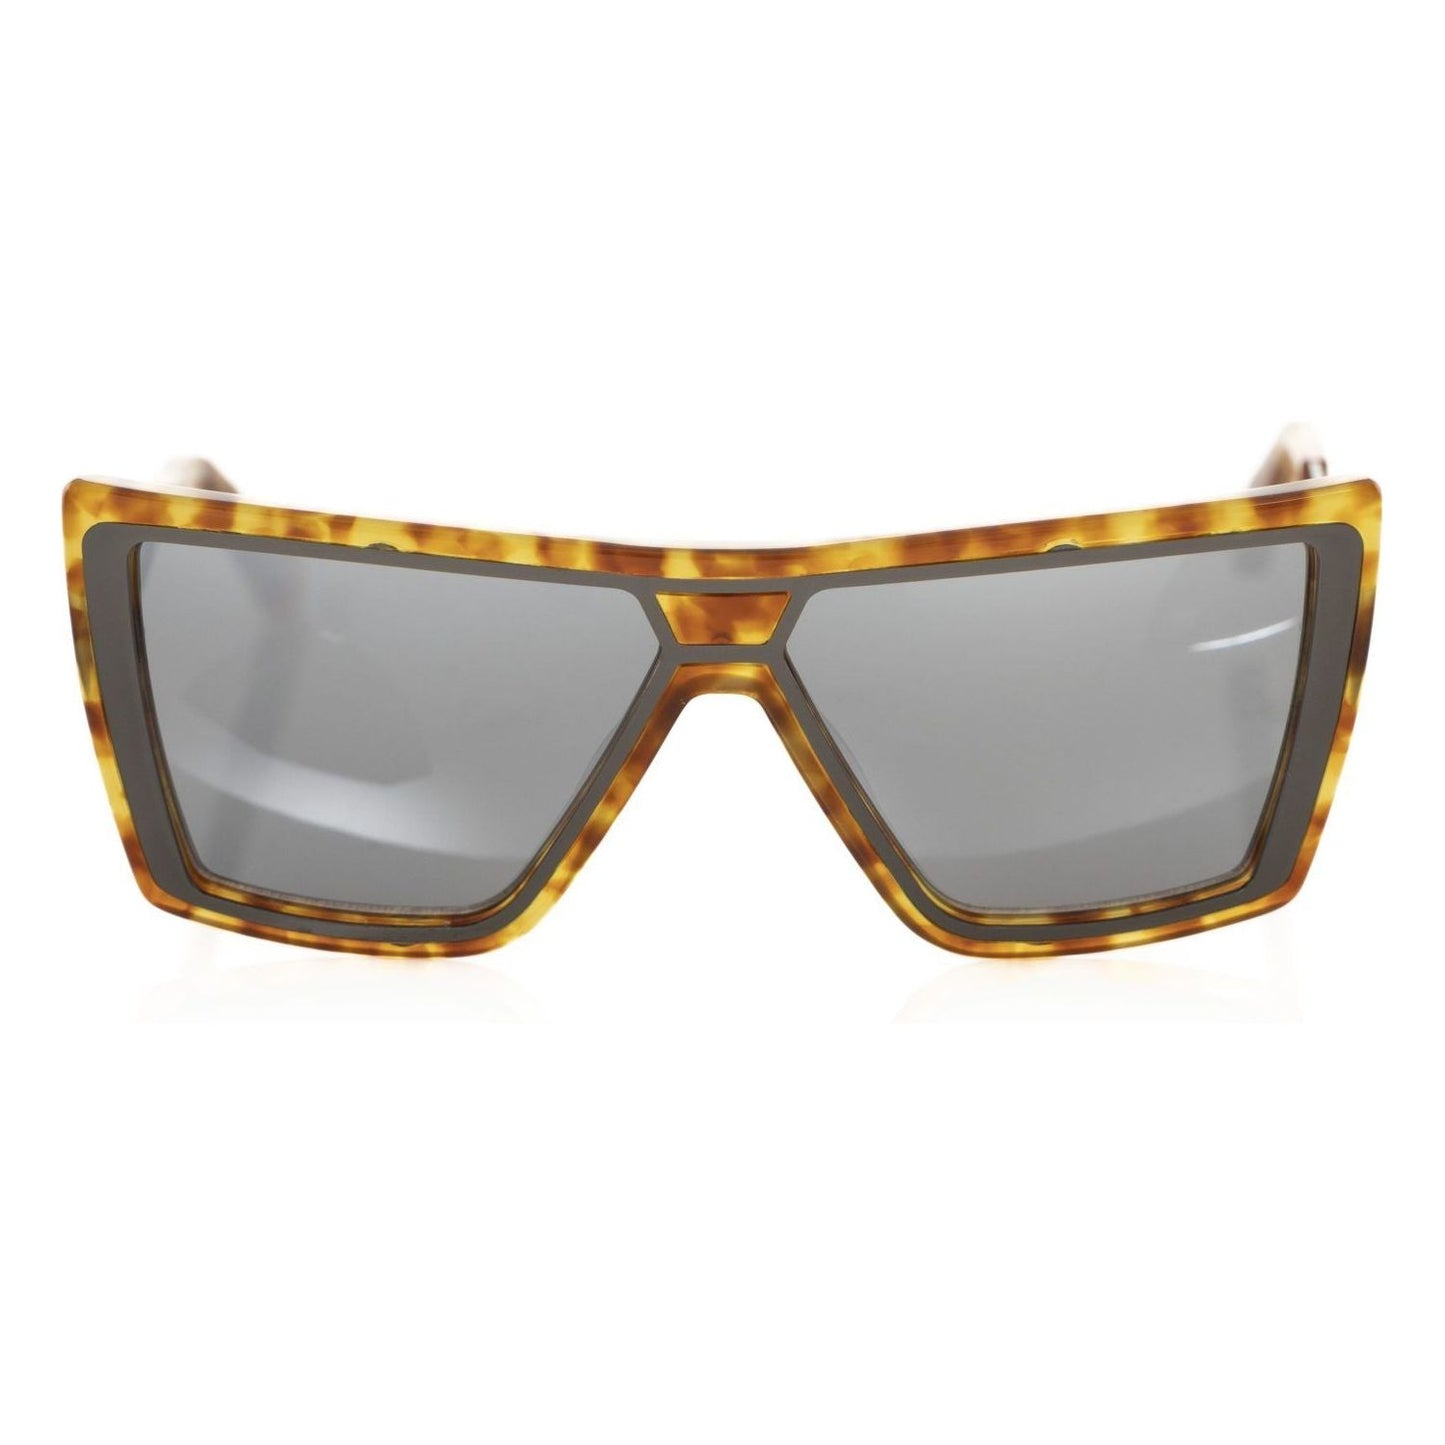 Frankie Morello Chic Tortoise Shell Square Sunglasses brown-acetate-sunglasses-1